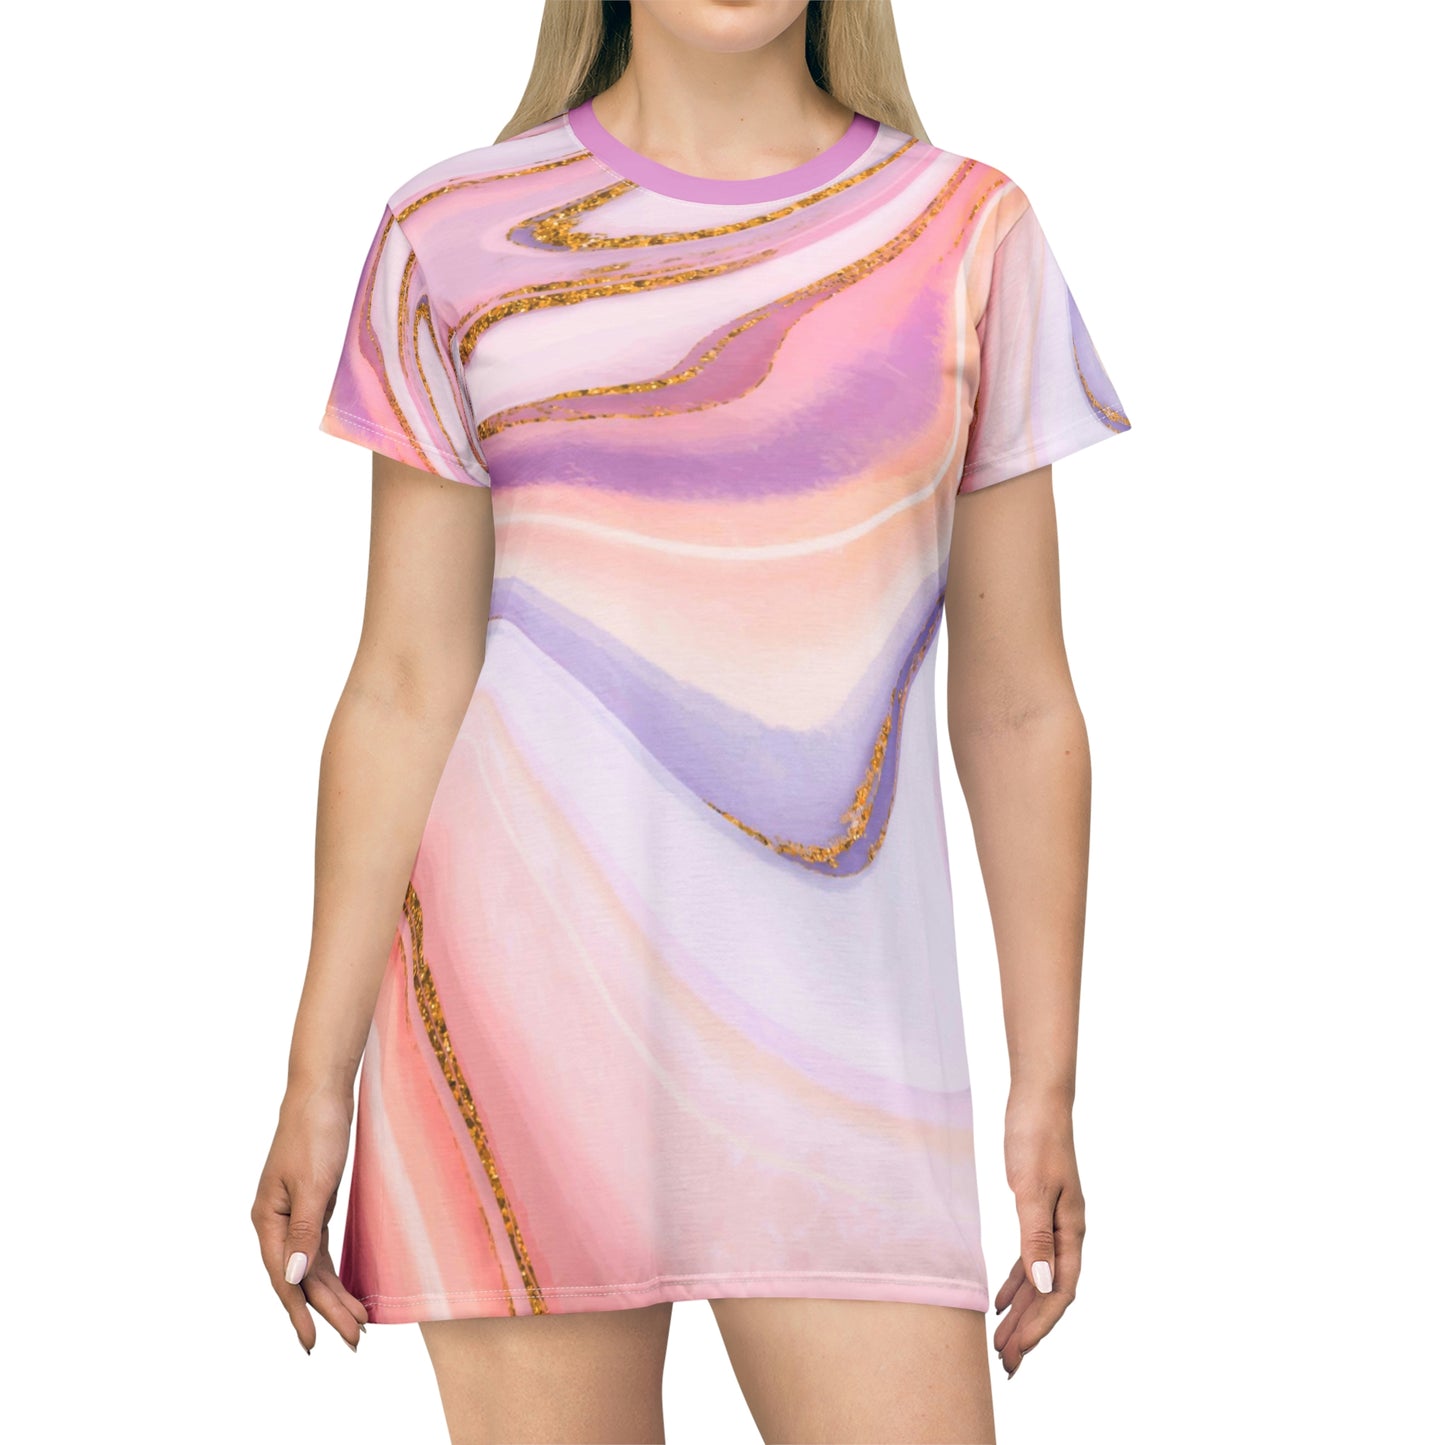 Pink Tshirt Dress, Geode Tye Dye Women Summer Beach Boho Cute Festival Casual Designer Short Sleeve Girls Ladies Tee